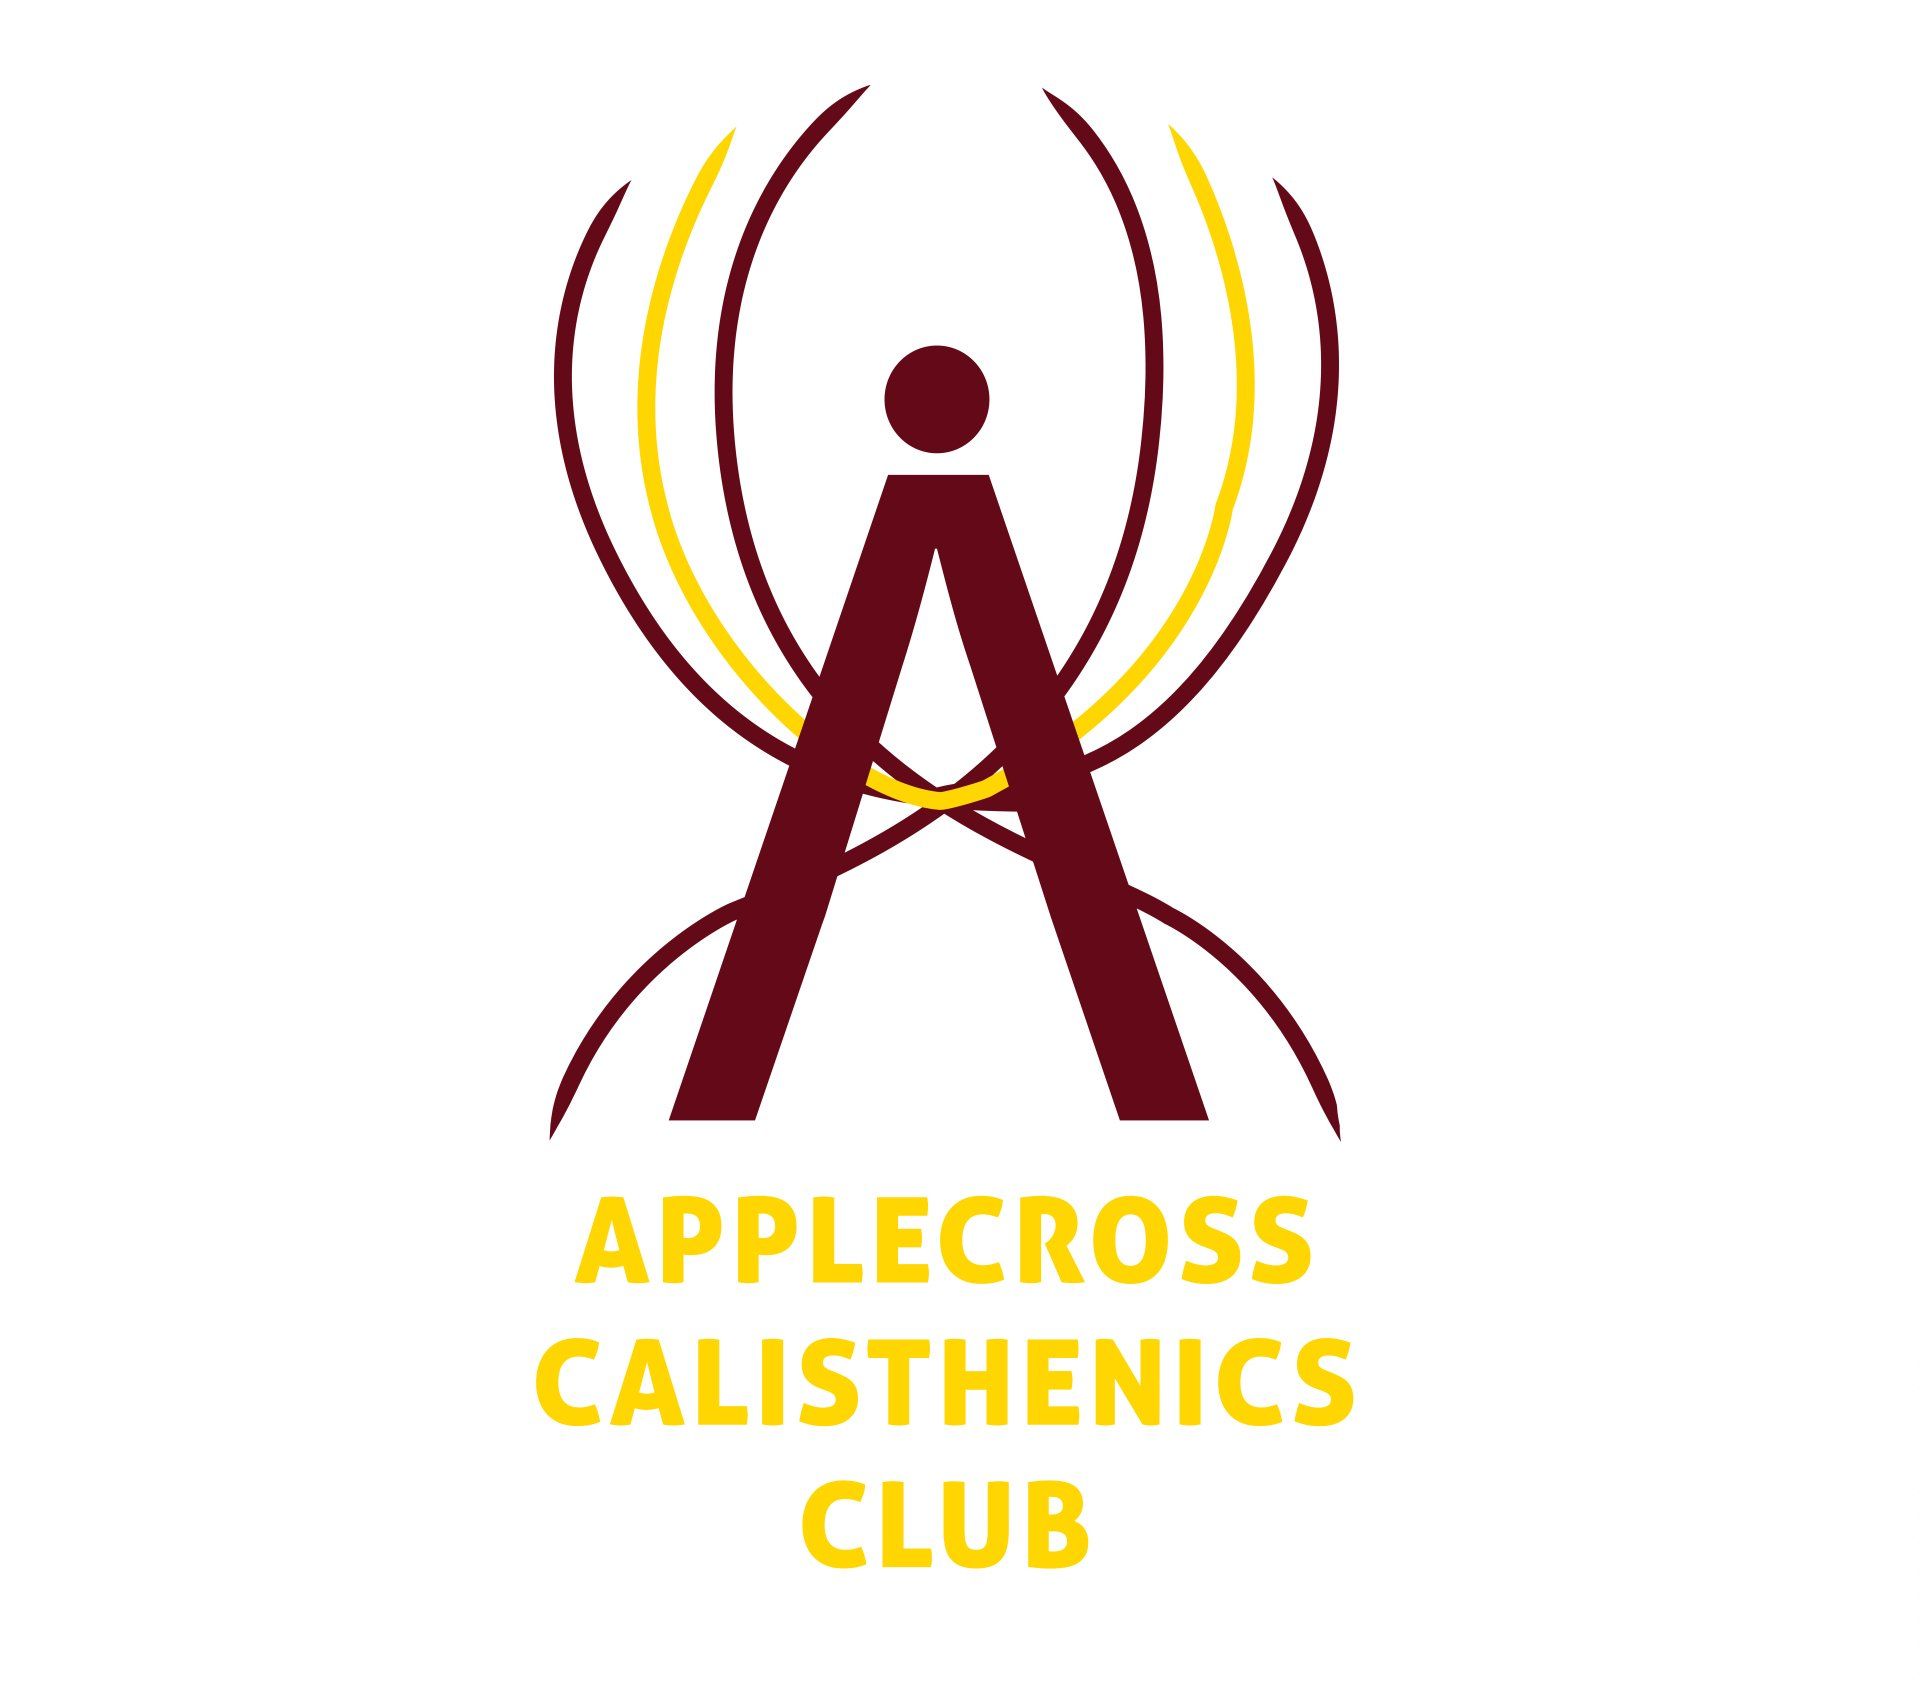 Applecross Calisthenics Club